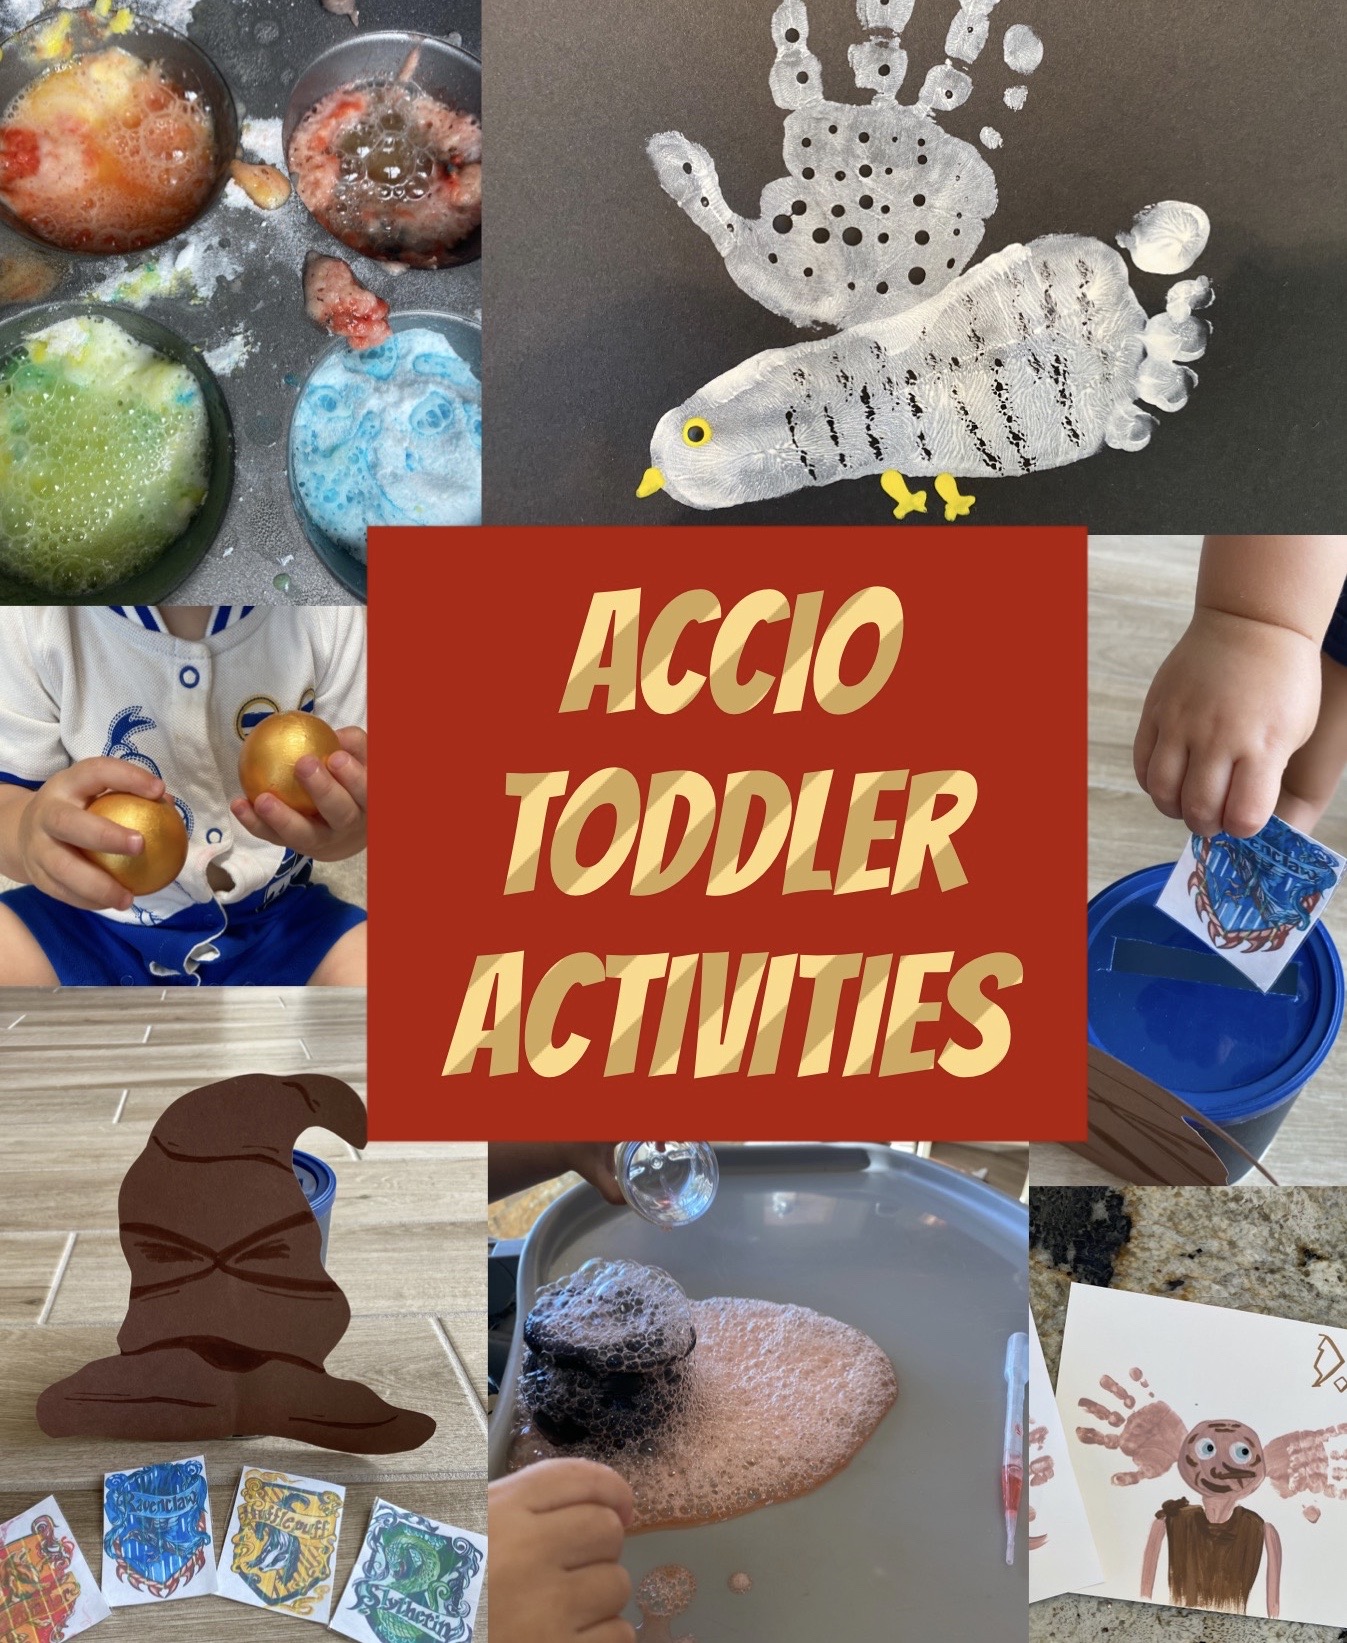 Accio Toddler Activities